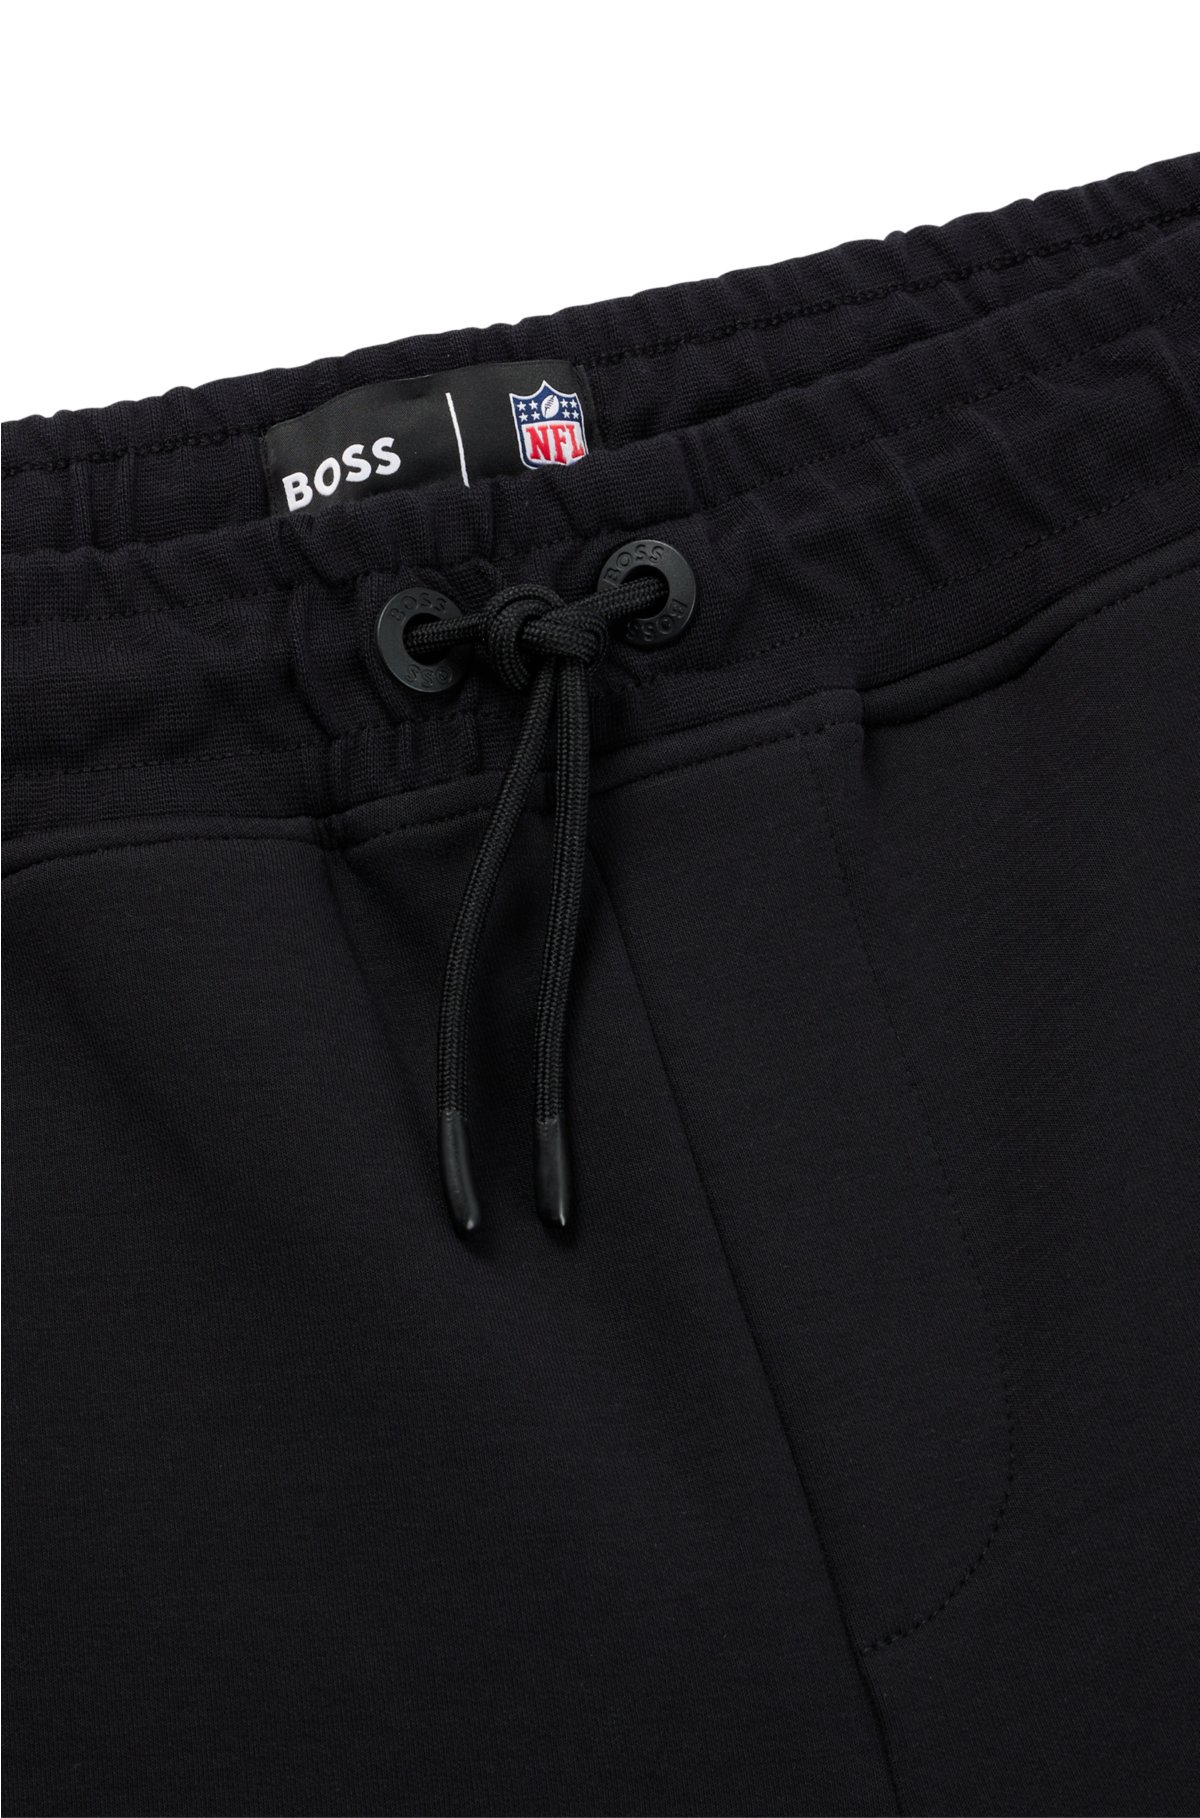 BOSS x NFL cotton-blend tracksuit bottoms with collaborative branding, Bucs